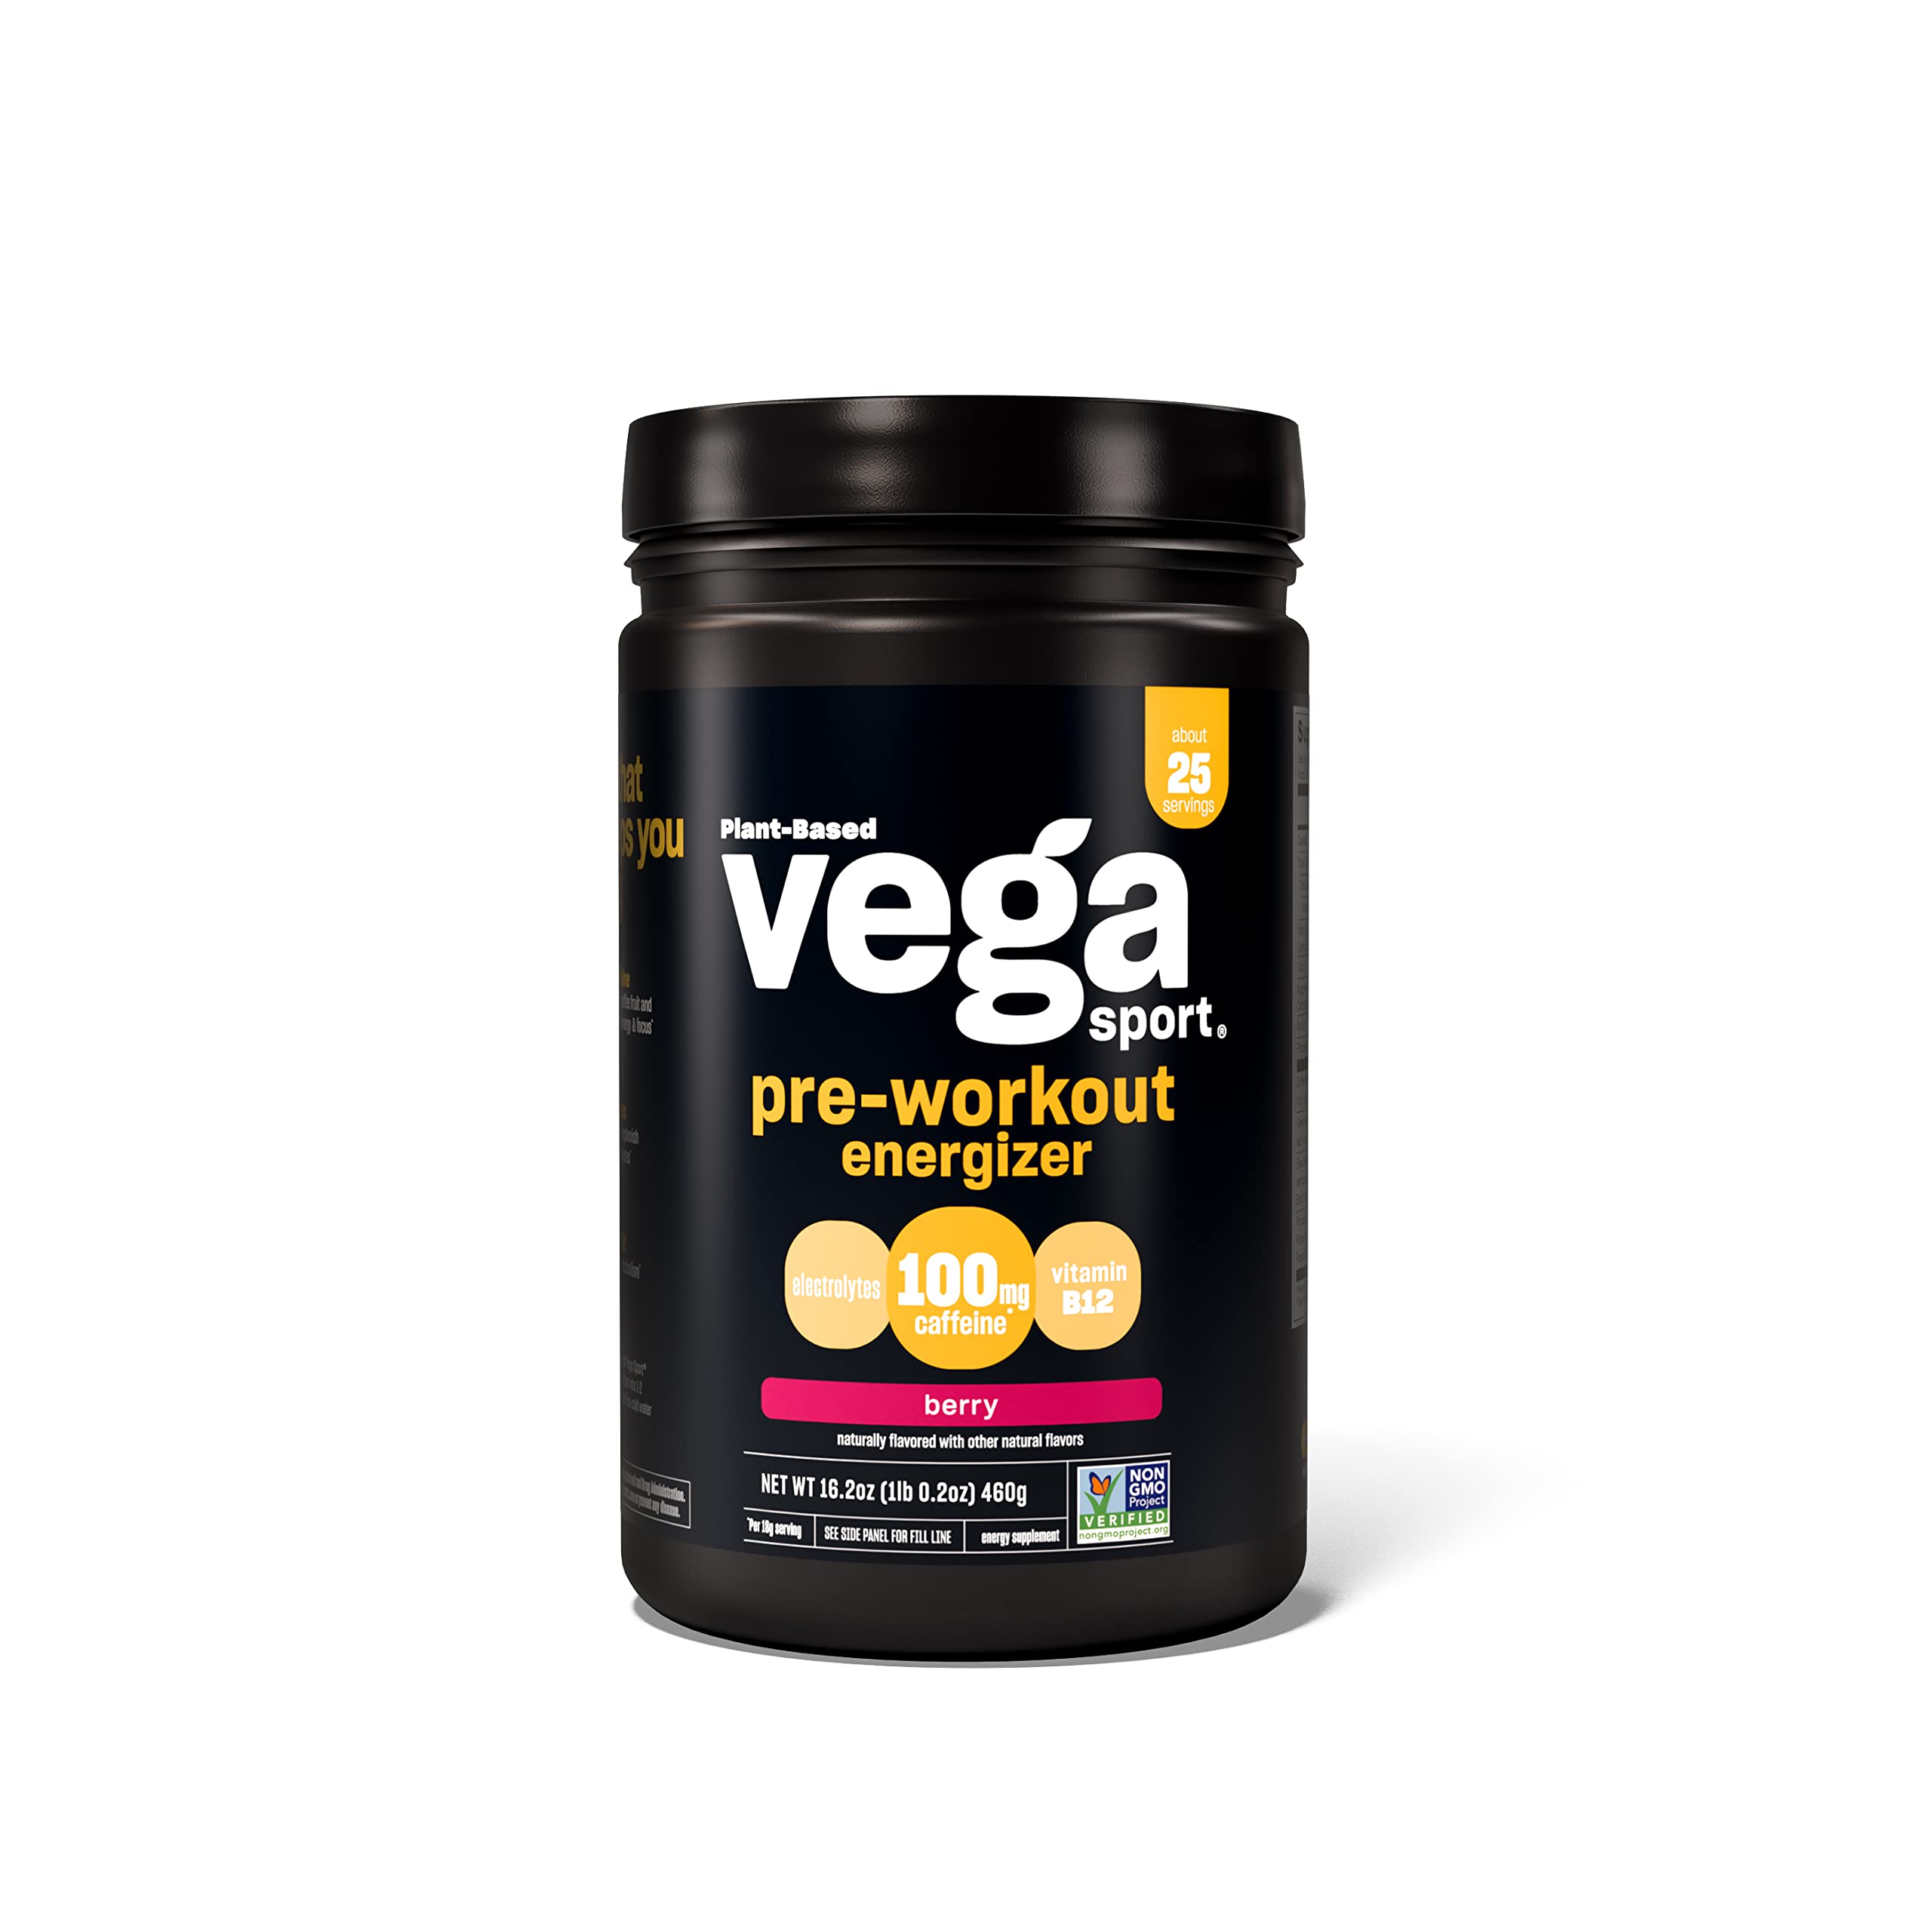 $13.09 /w S&S: Vega Sport Pre-Workout Energizer Berry (25 Servings), 1.1 lbs